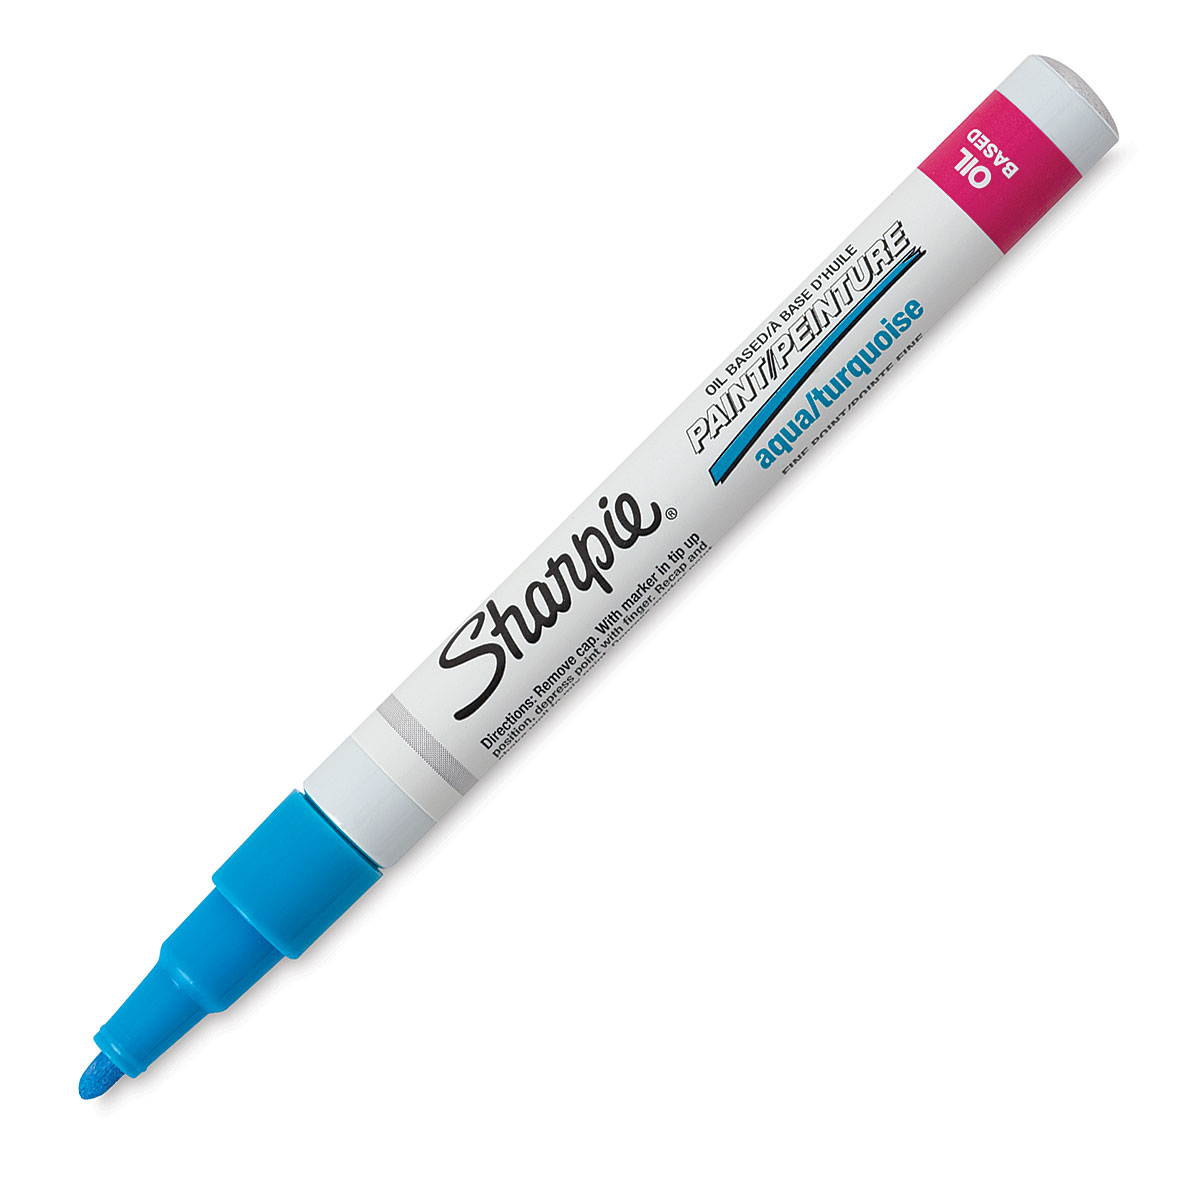 Sharpie Oil-Based Paint Marker - Aqua, Fine Point